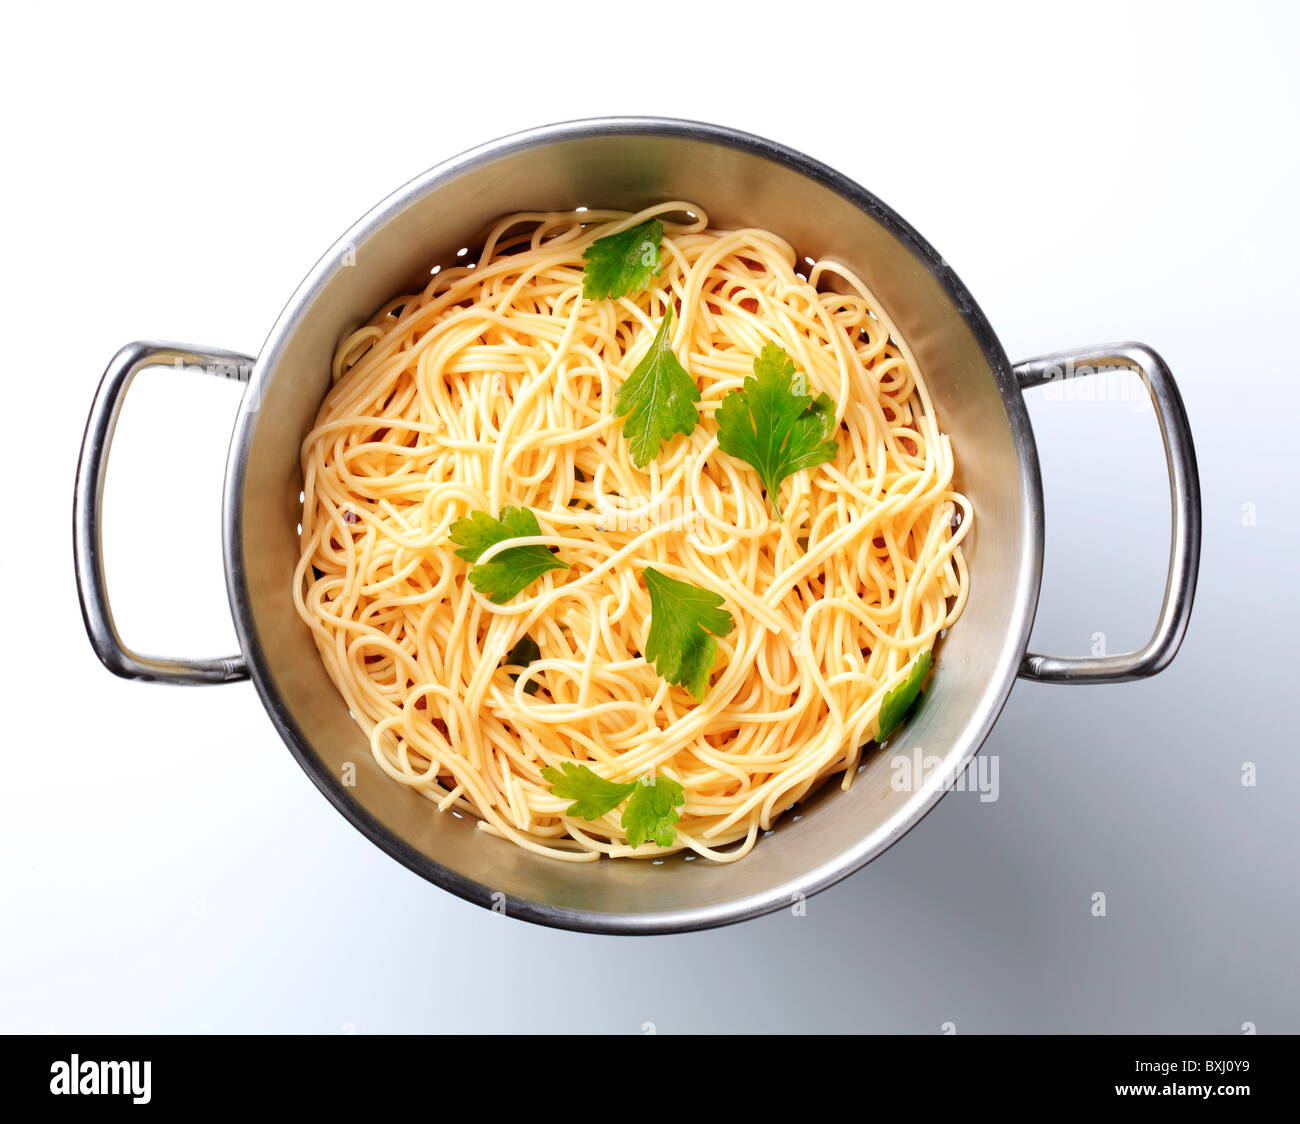 Cooked spaghetti in a colander Stock Photo